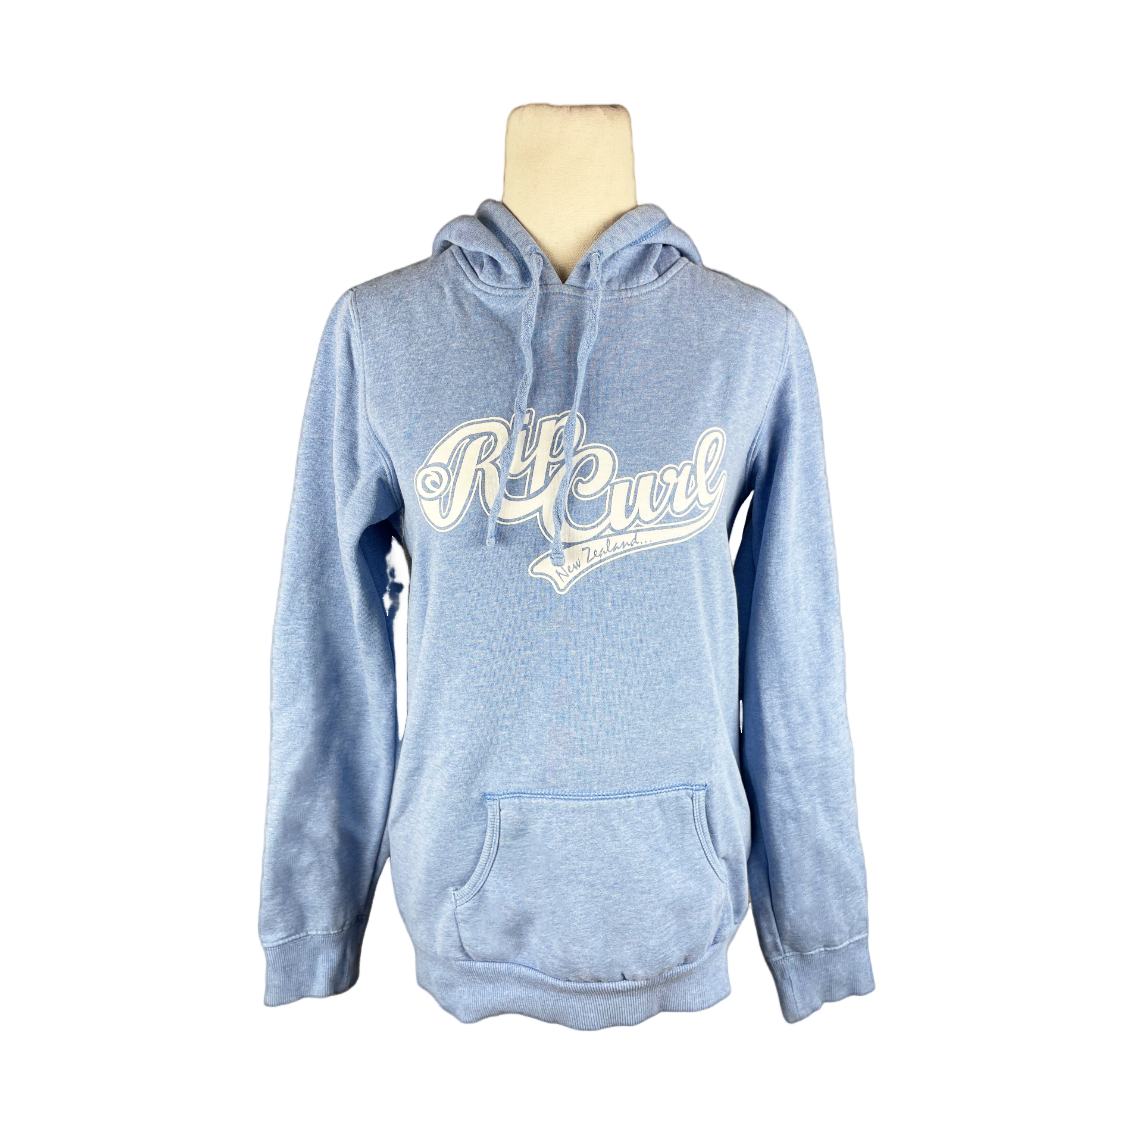 Ripcurl blue hoodie | size 8